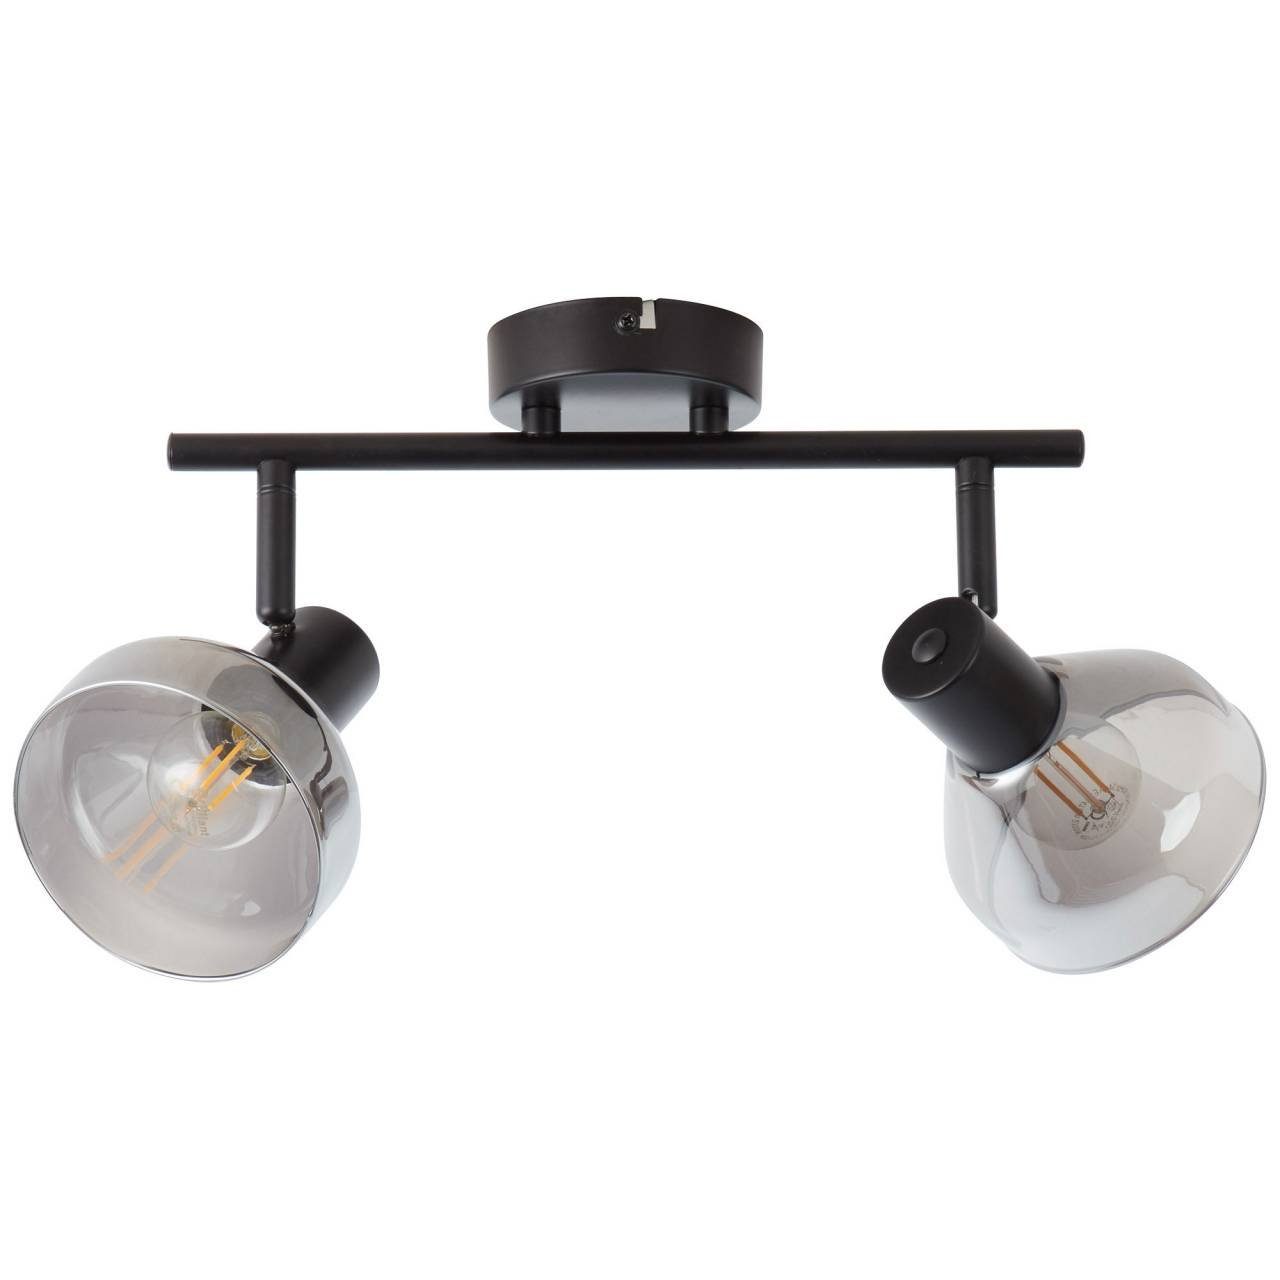 Brilliant Deckenleuchte Reflekt, 18W Lampe Spotrohr Reflekt schwarzmatt/rauchglas E14, D45, 2x 2flg